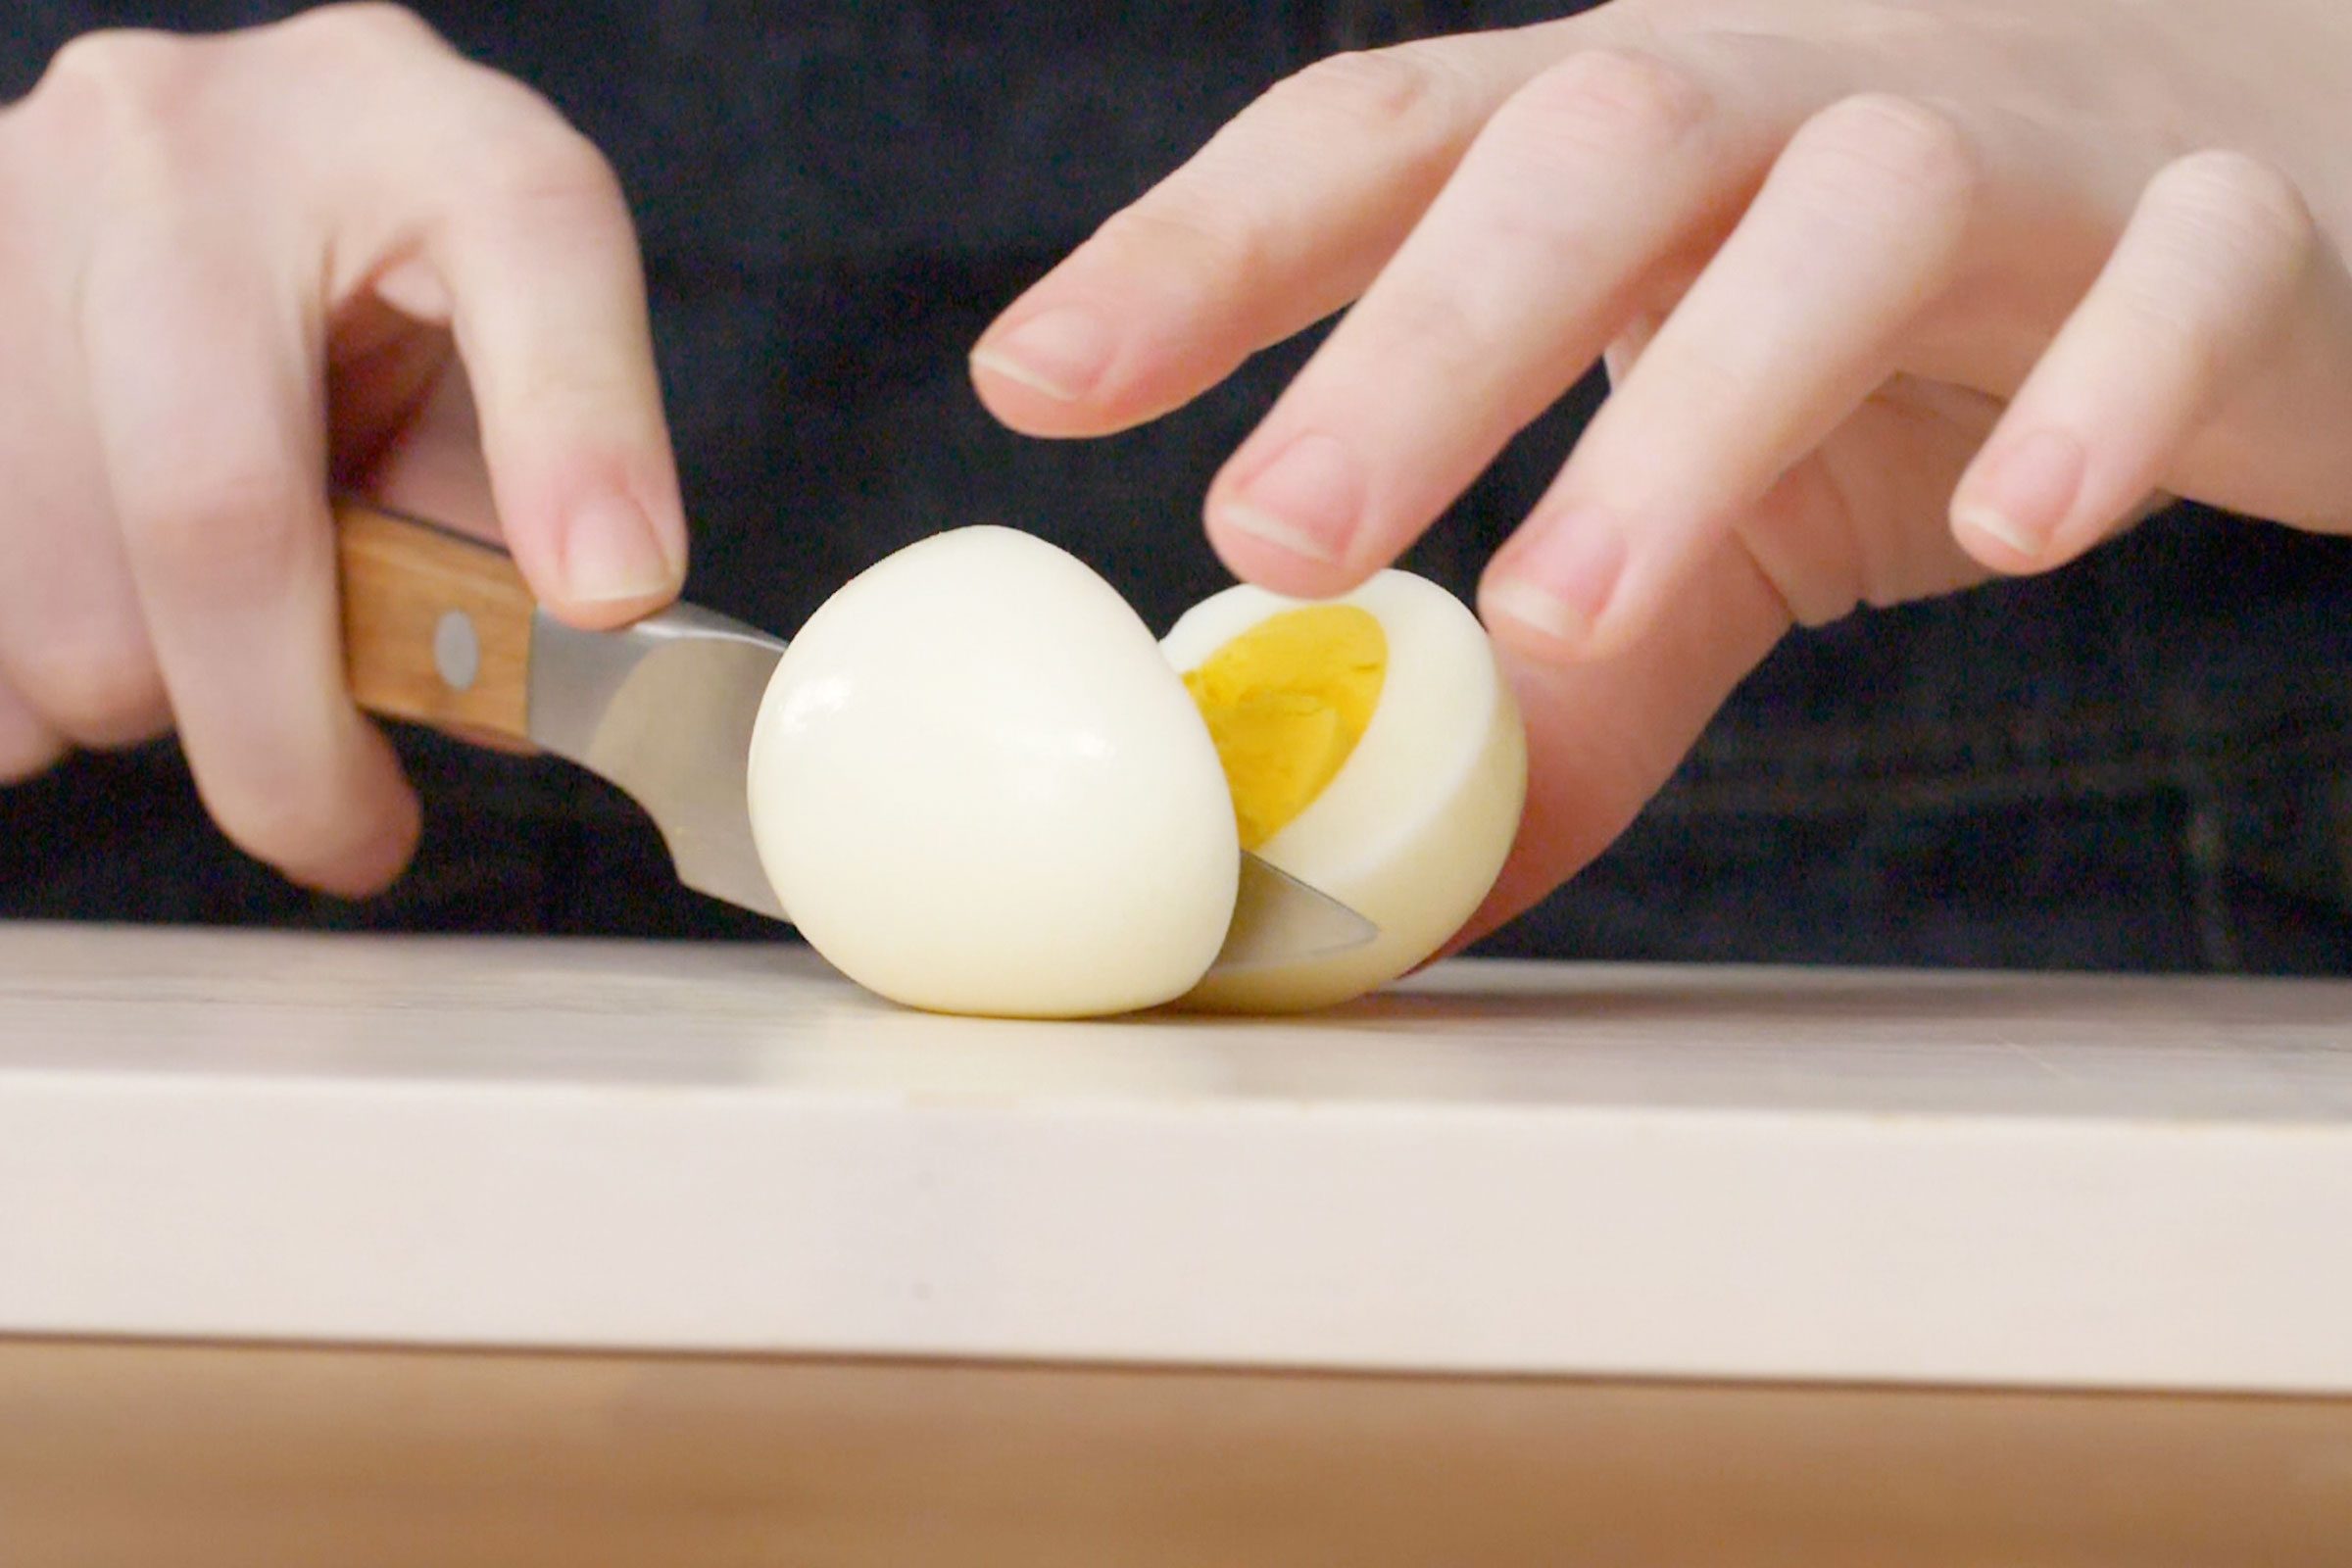 cutting a hard boiled egg in half